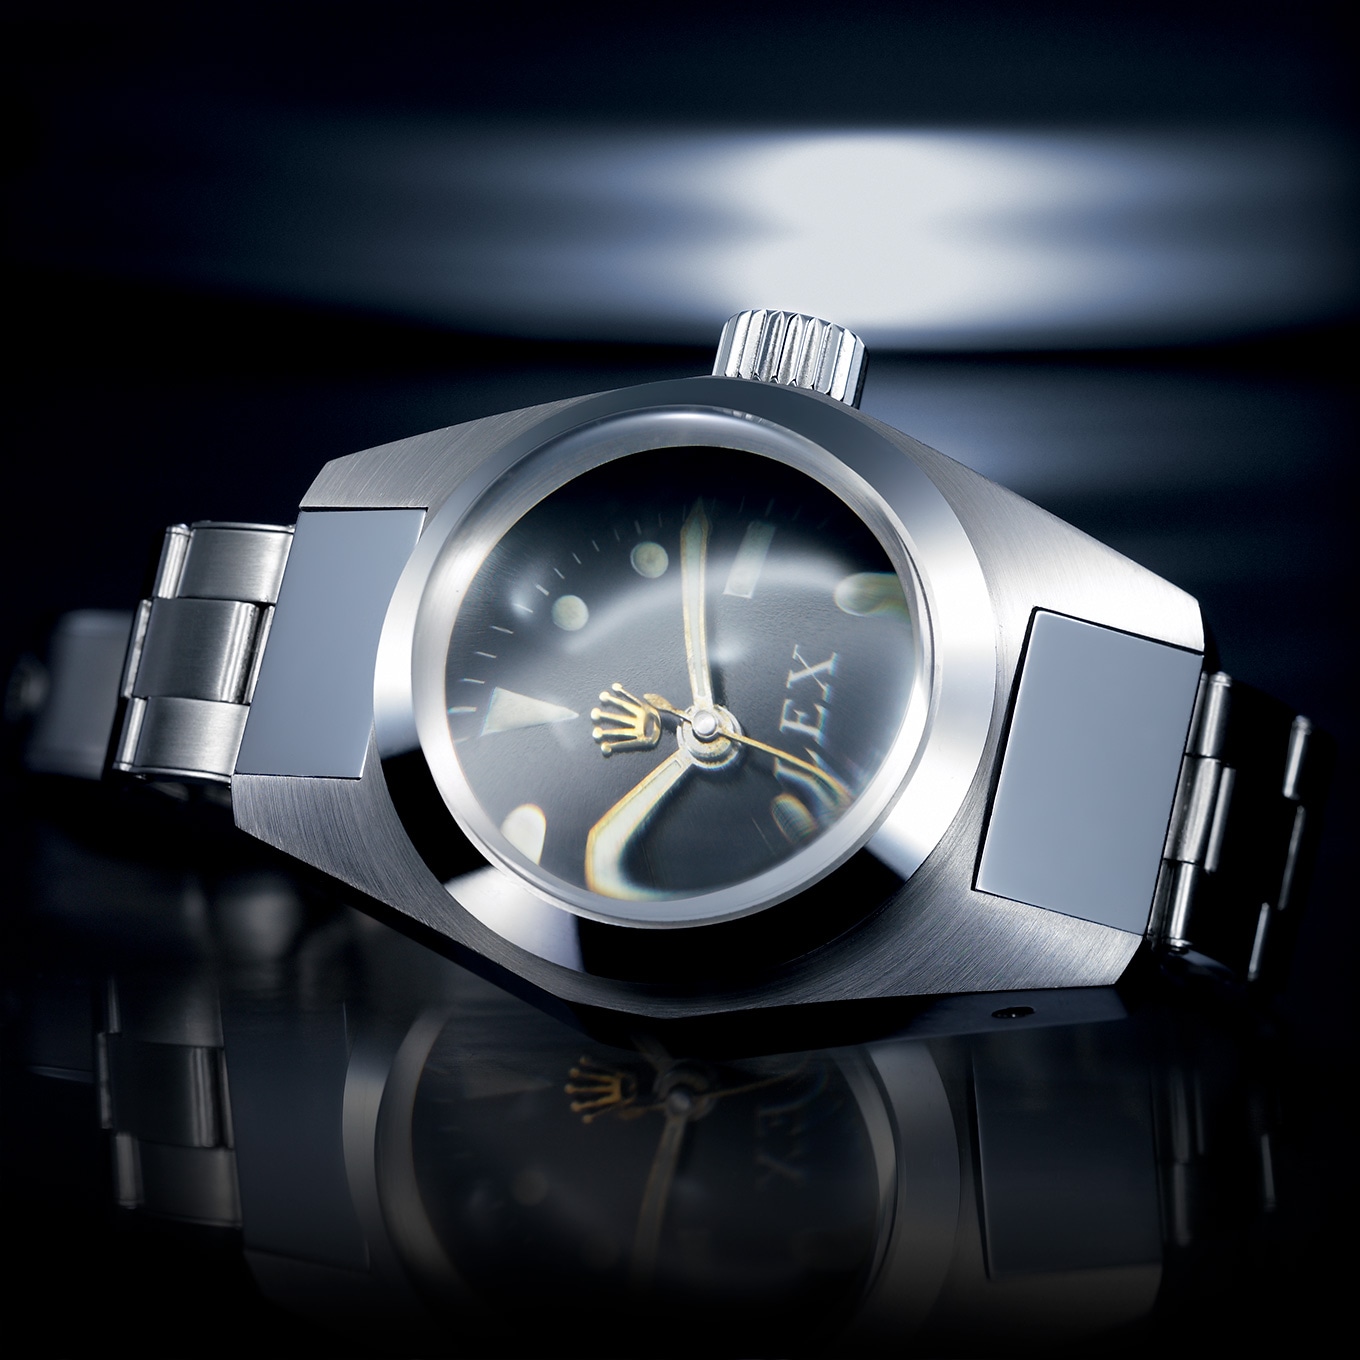 Rolex Sea-Dweller - The Watch that 